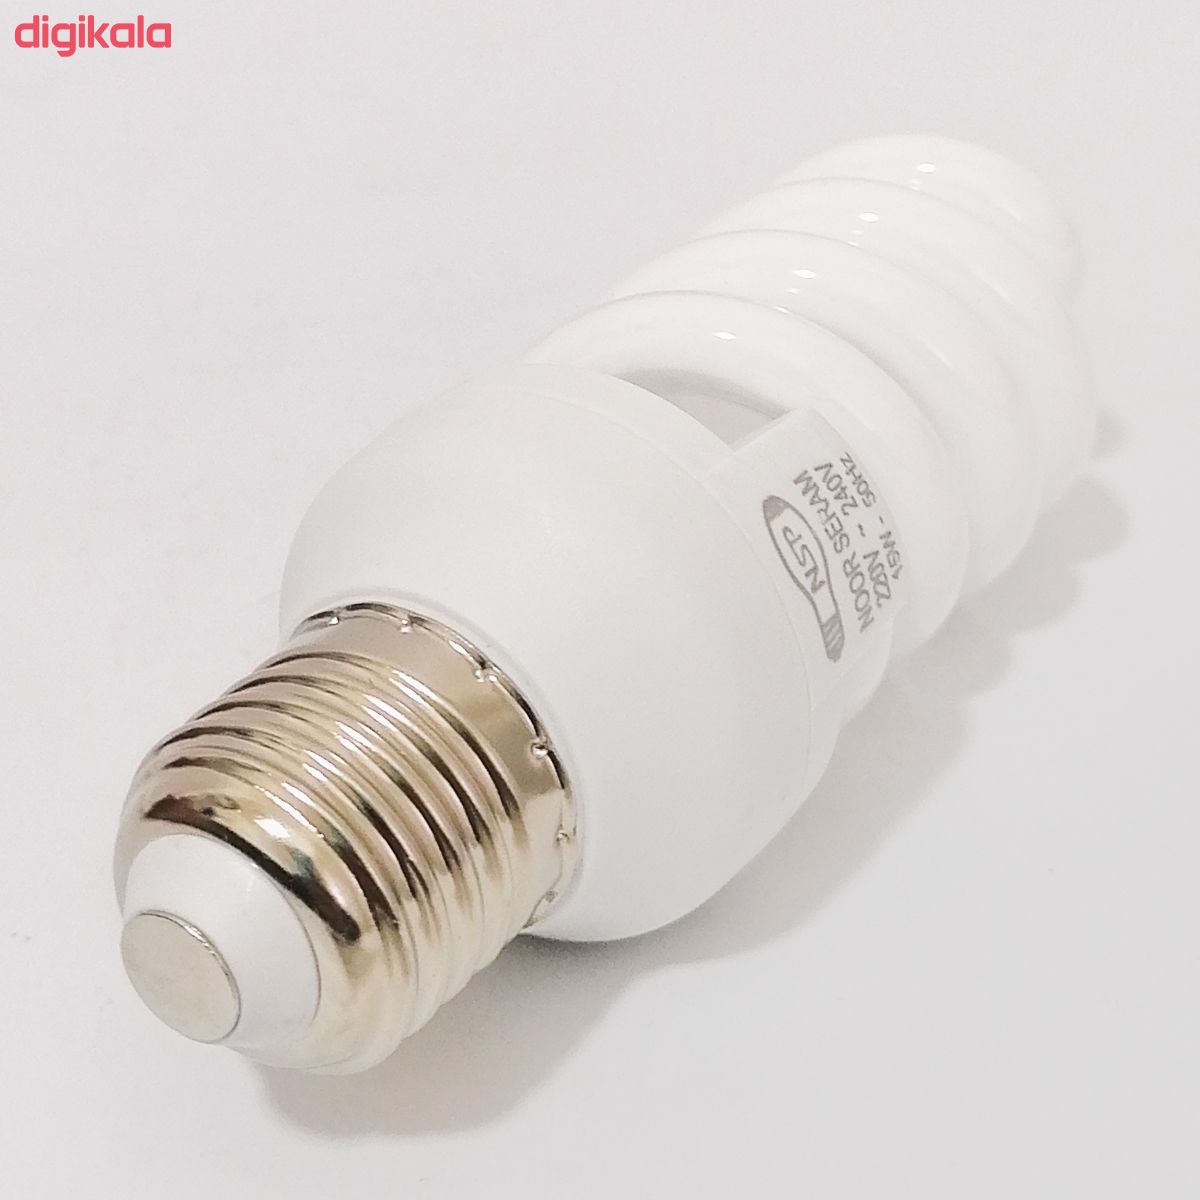 لامپ کم مصرف 15 وات نورصرام مدل N8515 پایه E27